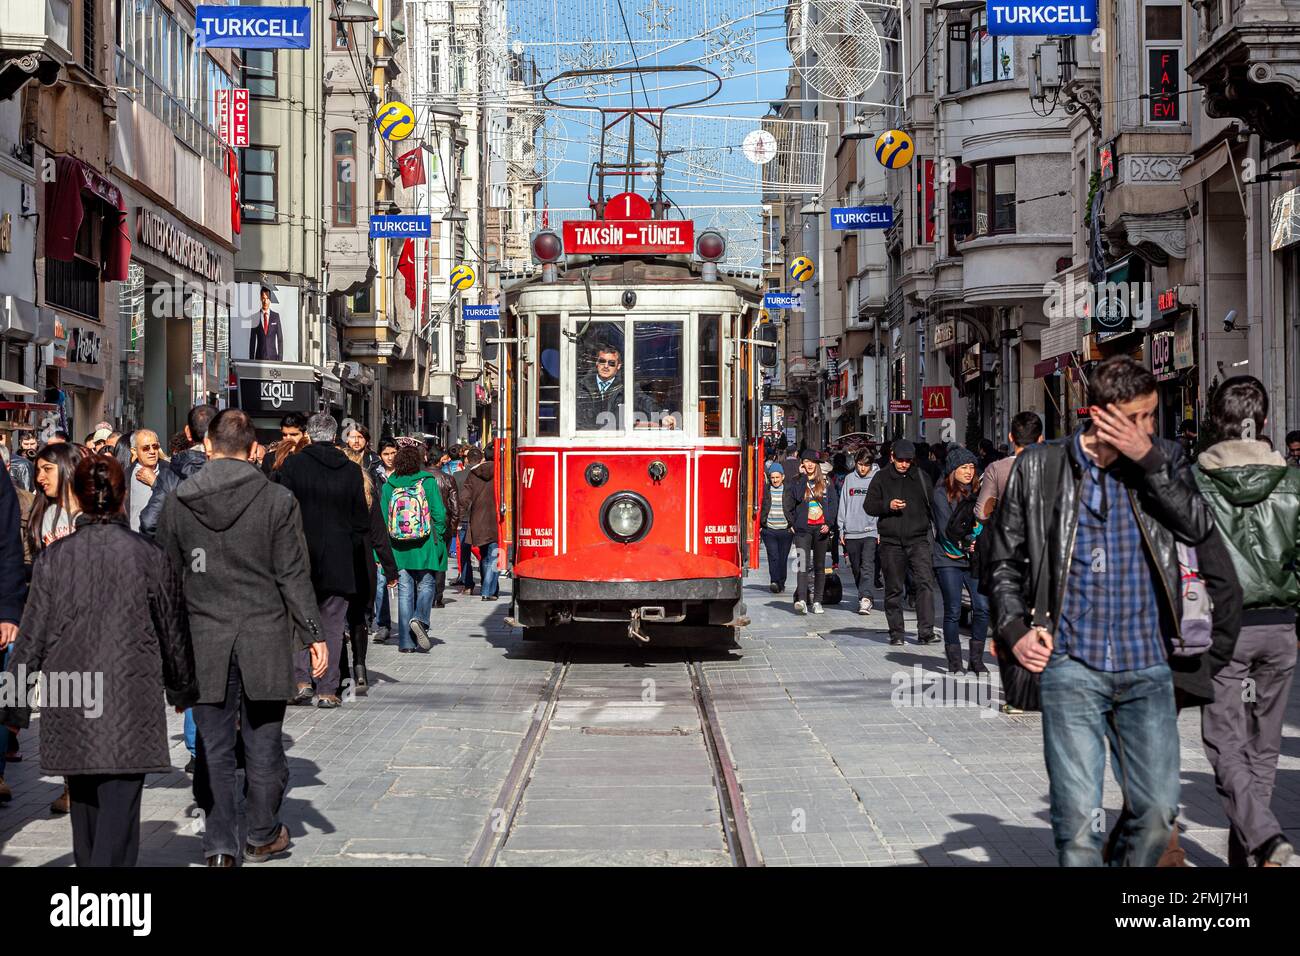 Istanbul, Turkey - 03.06.2013: Heritage trams of Istanbul; Taksim - Tunel Nostalgia Tramway line, operates on Istiklal Street between Taksim Square an Stock Photo